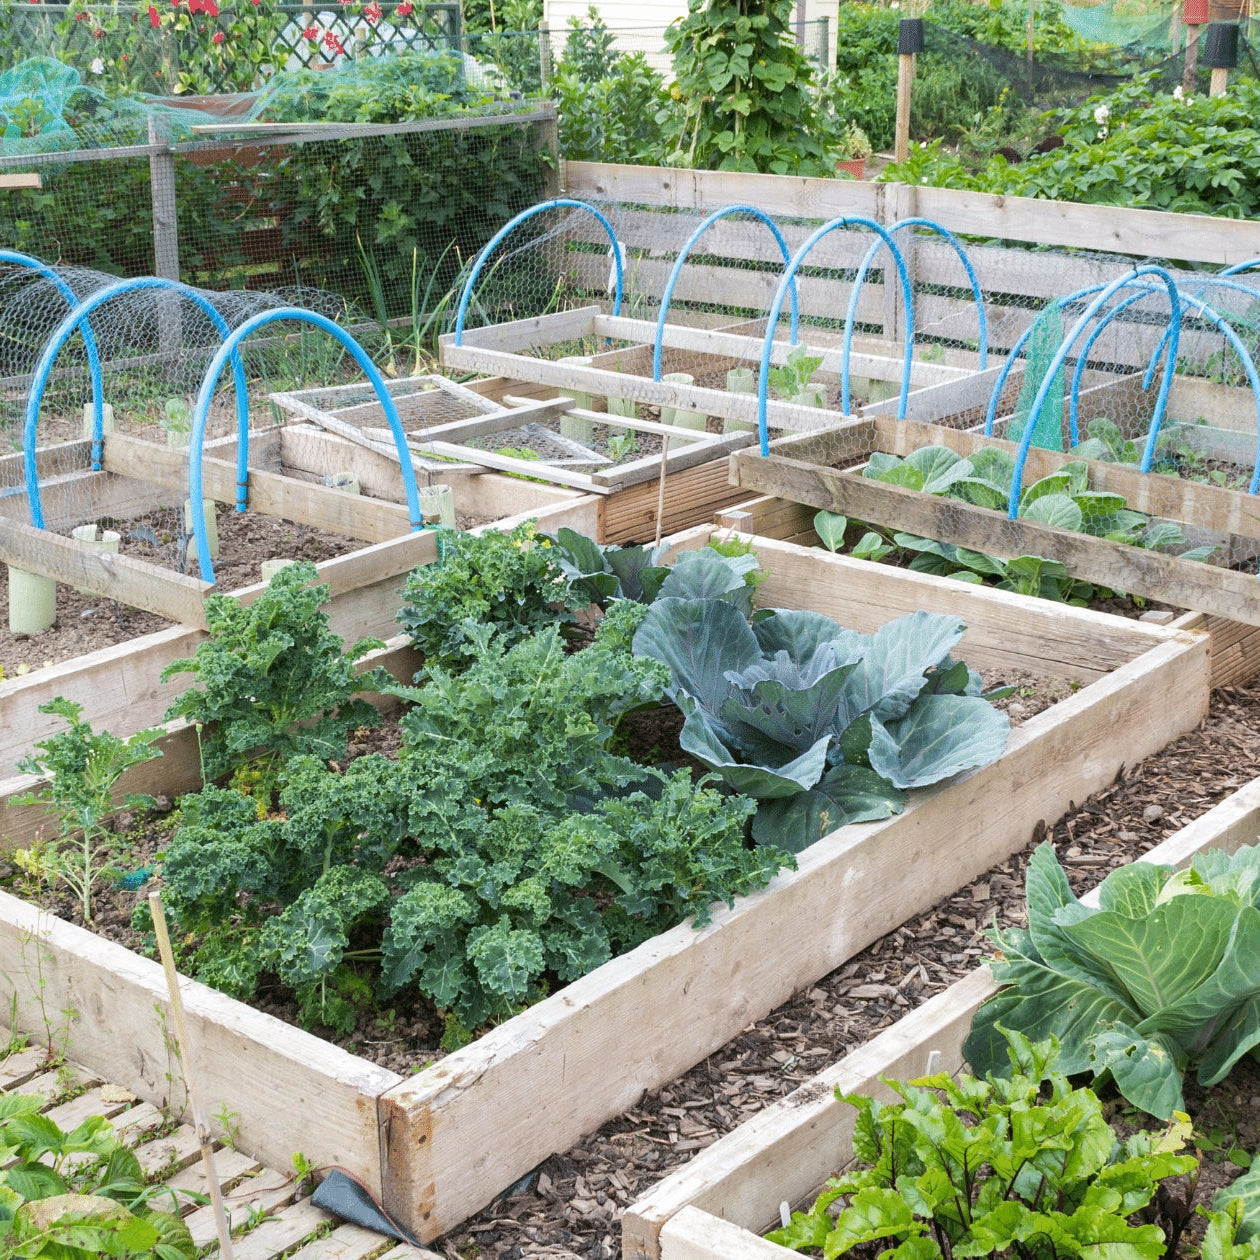 Raised garden beds full of leafy green vegetables in a community garden